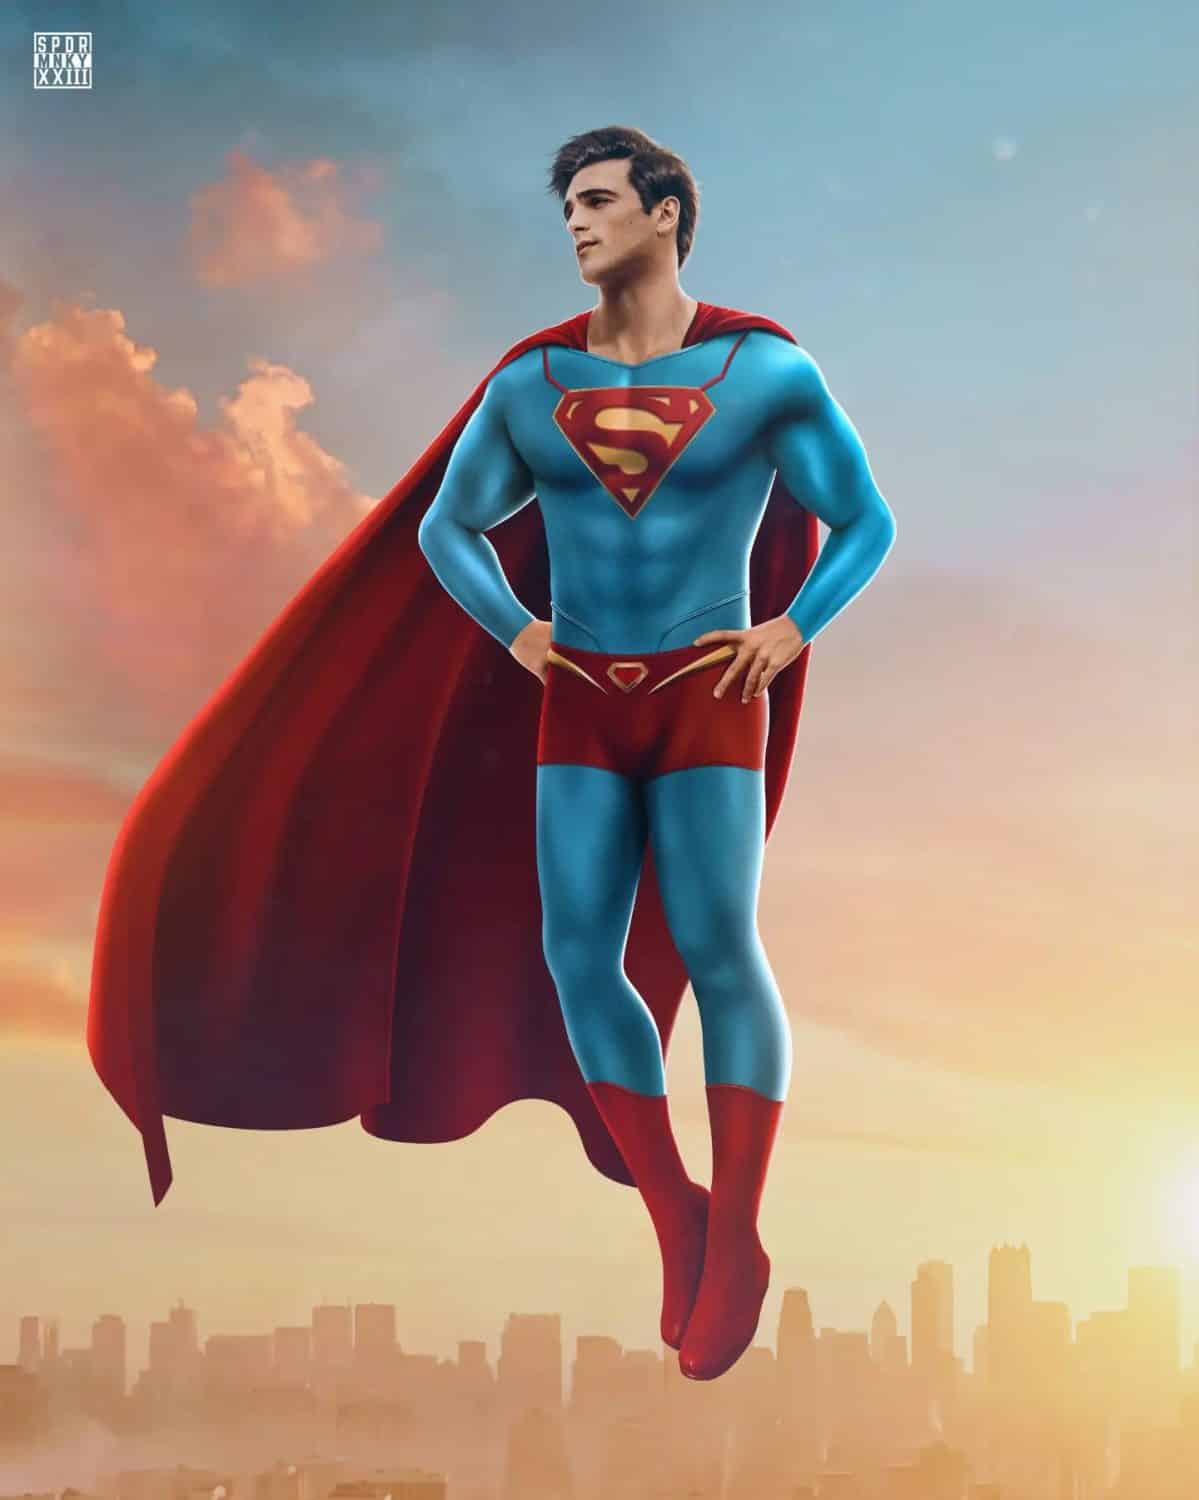 jacob elordi superman fan art